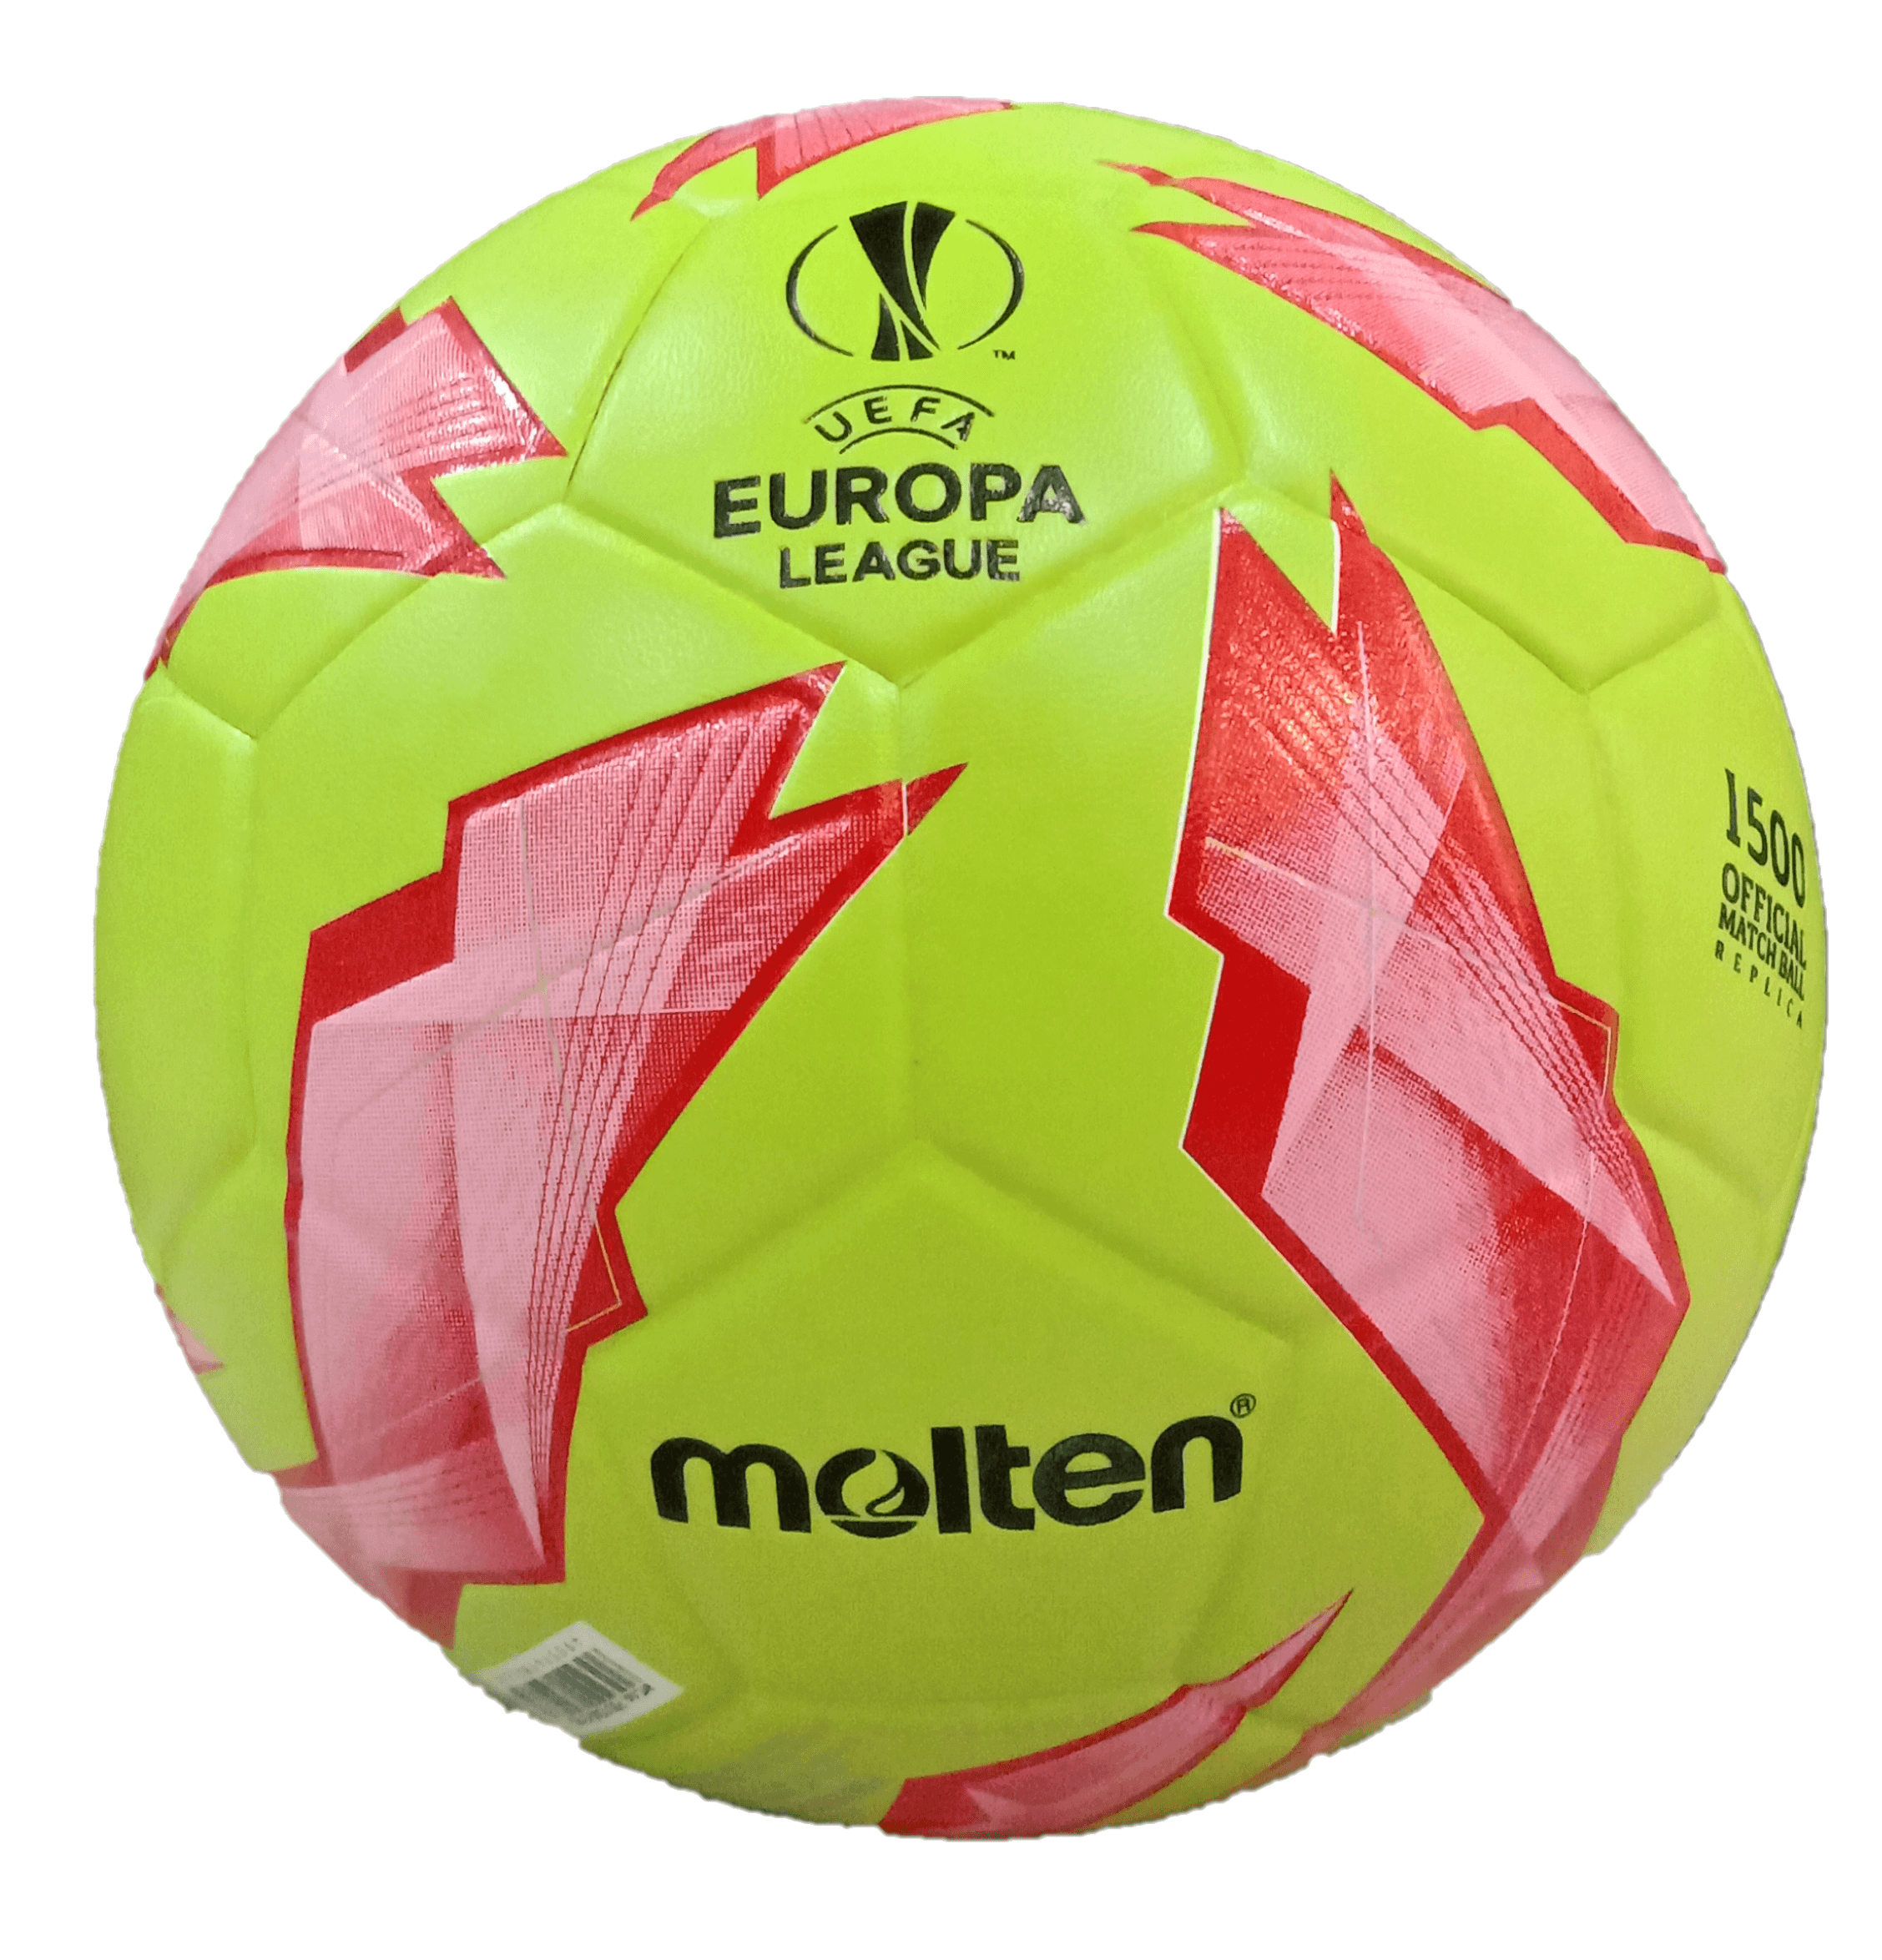 Molten F9U1500 Futsal Soccer Ball UEFA Europa League Green - Walmart.com - Walmart.com